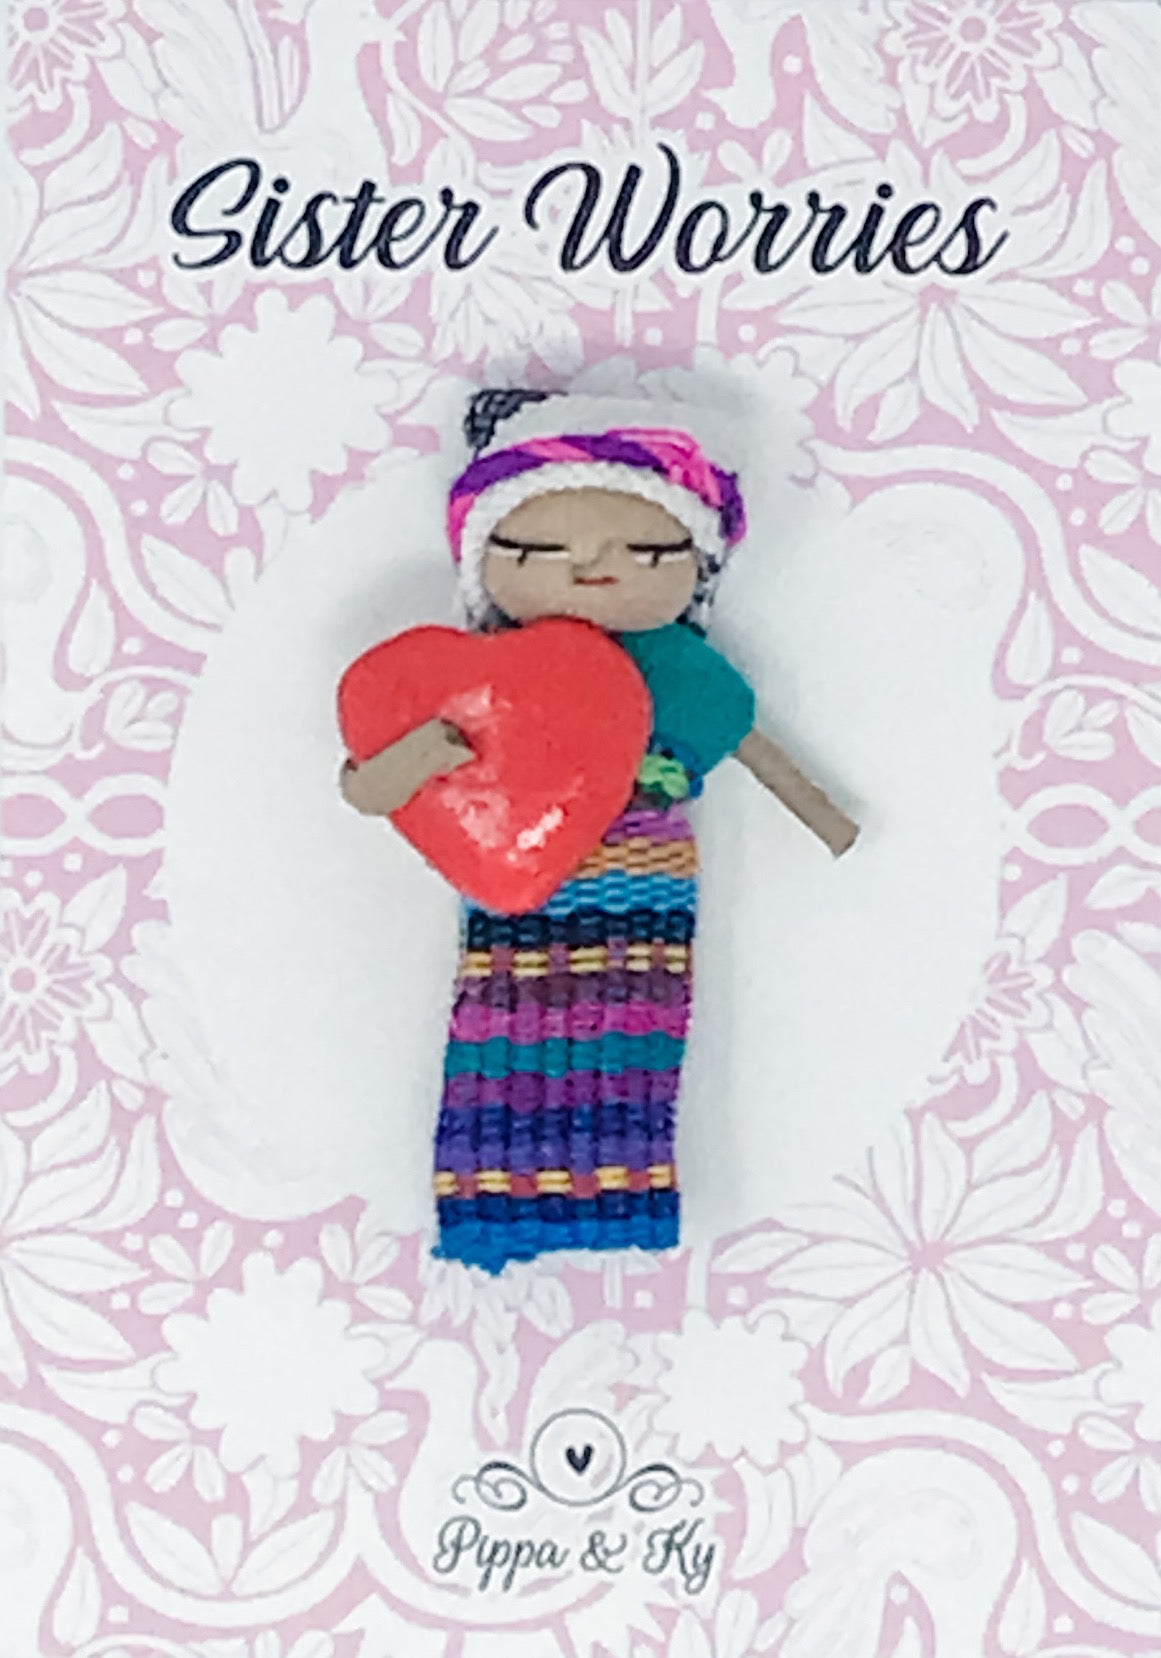 Muertolandia Presents: Worry Dolls Explained –